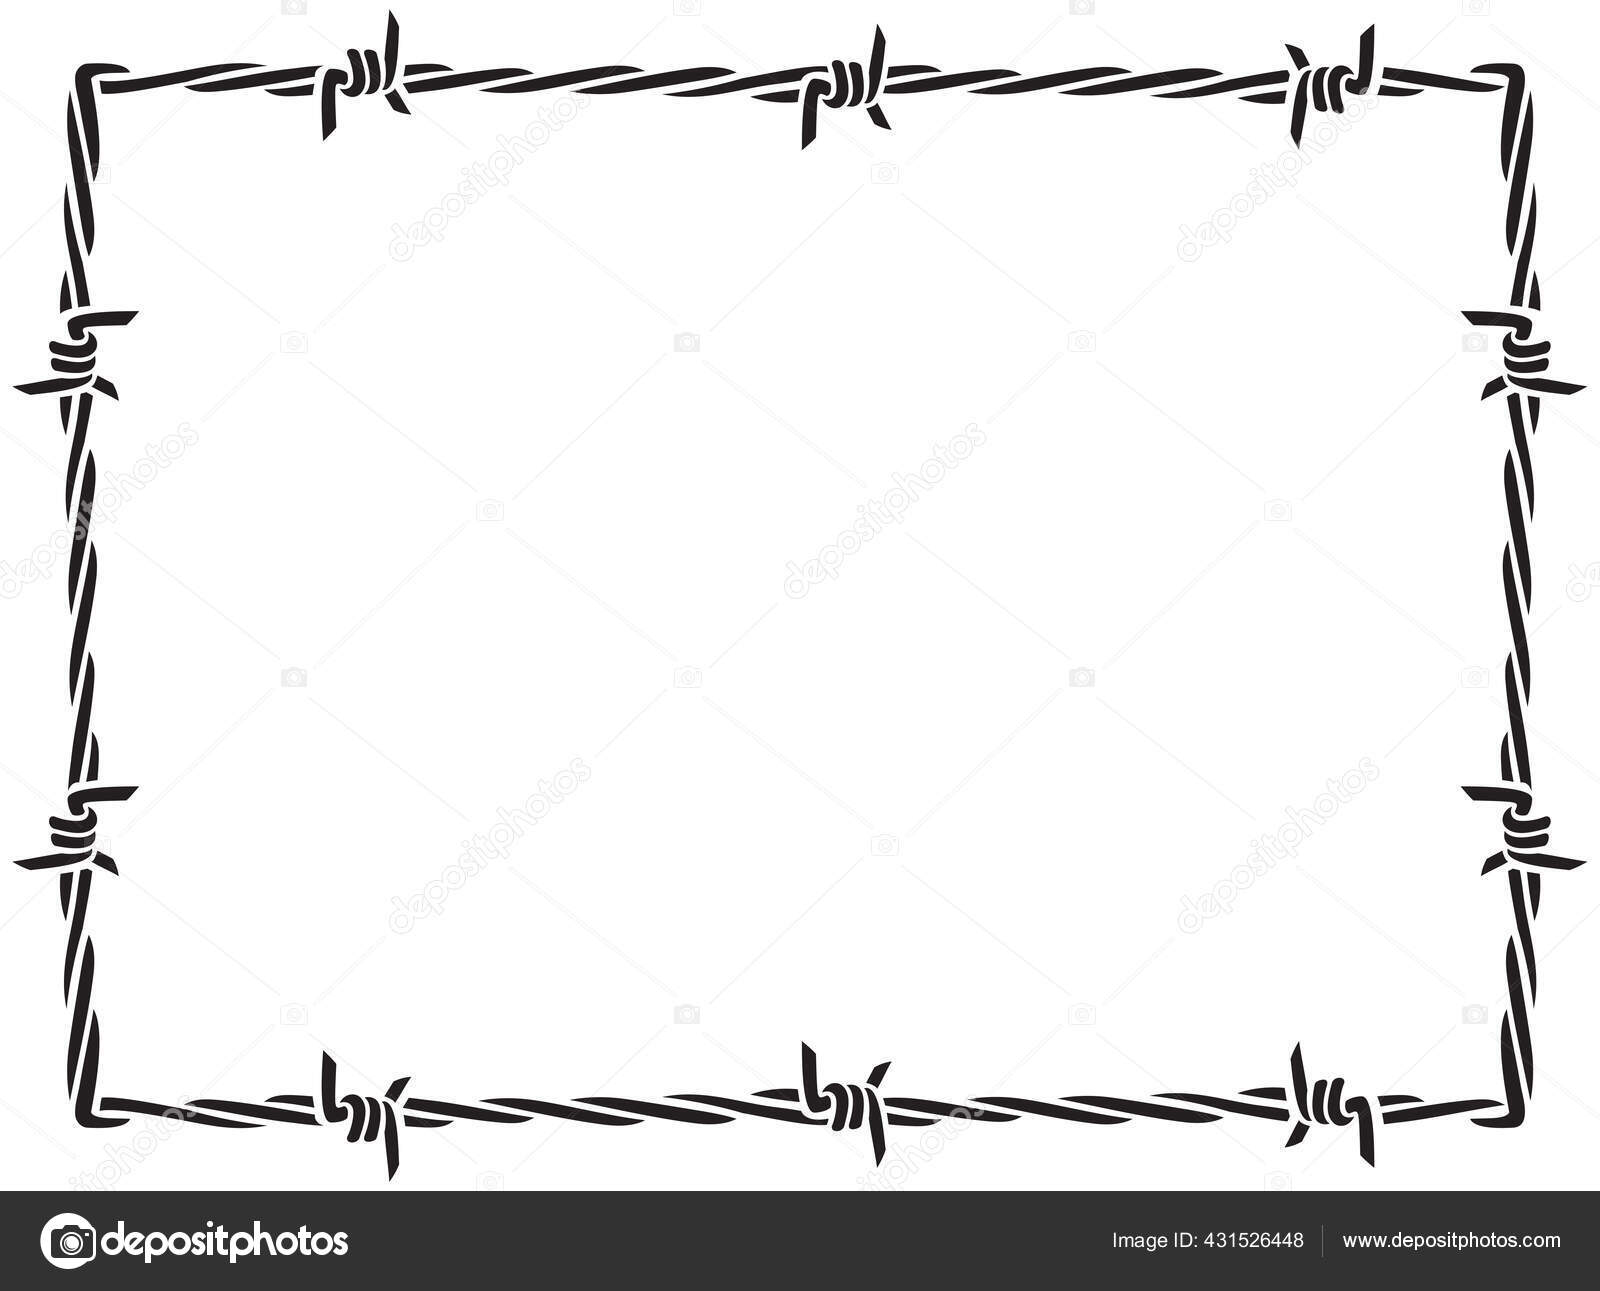 barbed wire corner border